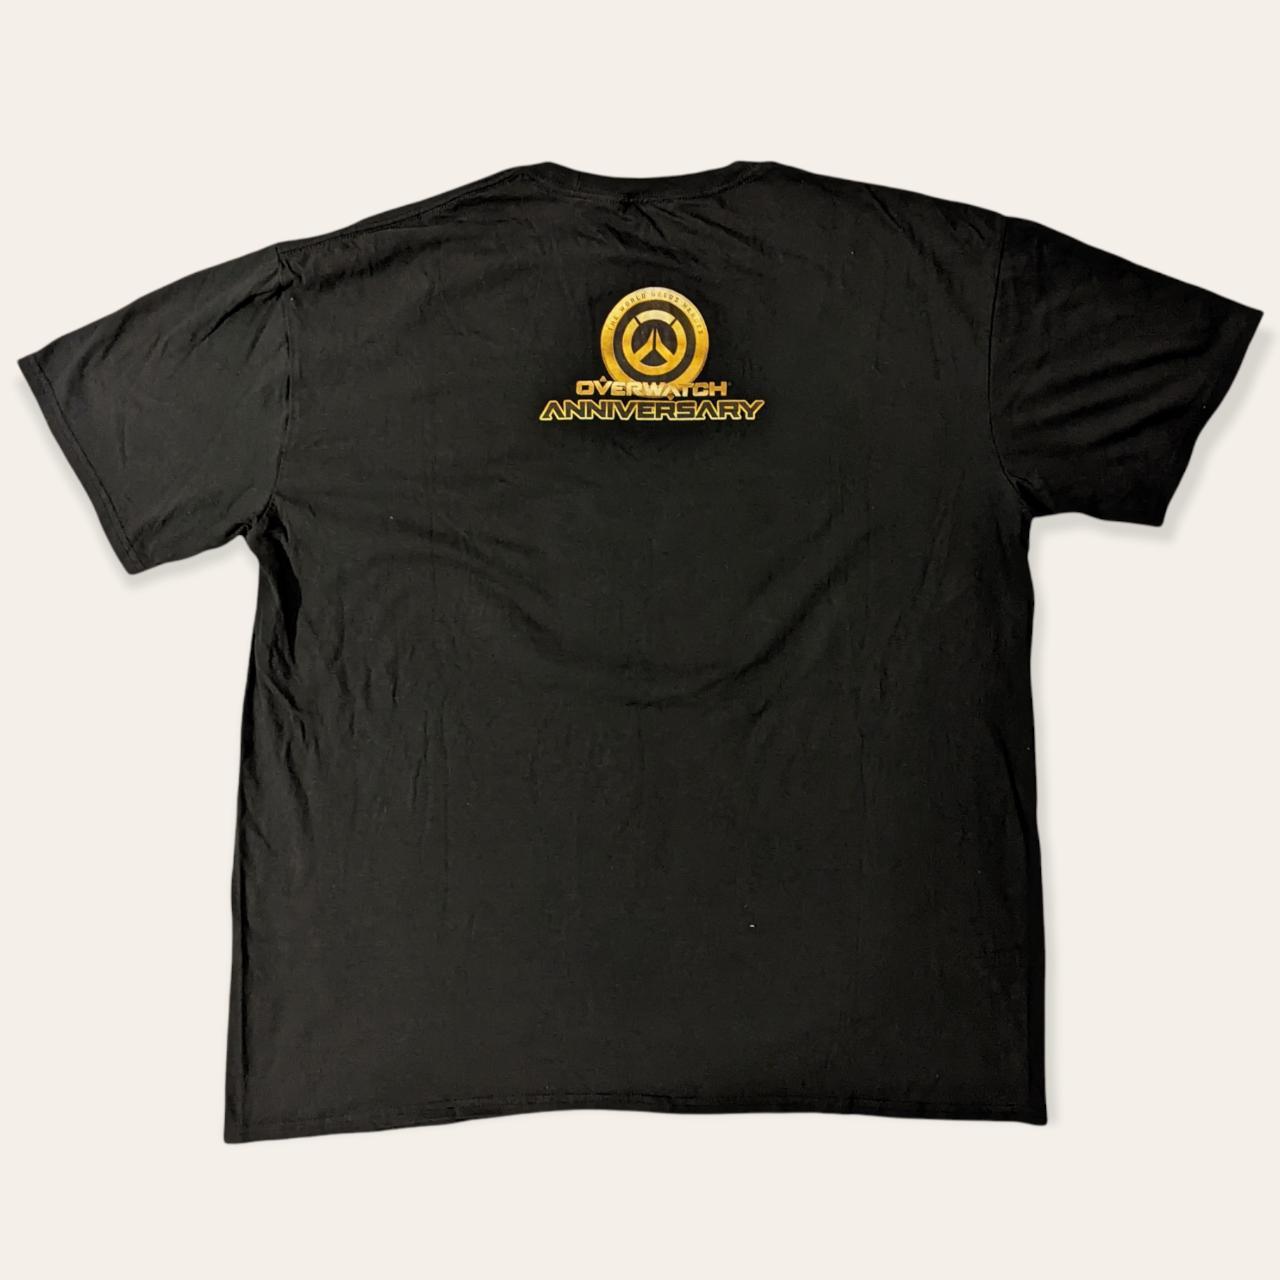 Product Image 2 - Overwatch Anniversary Black T-shirt

Size XXL
Lootwear